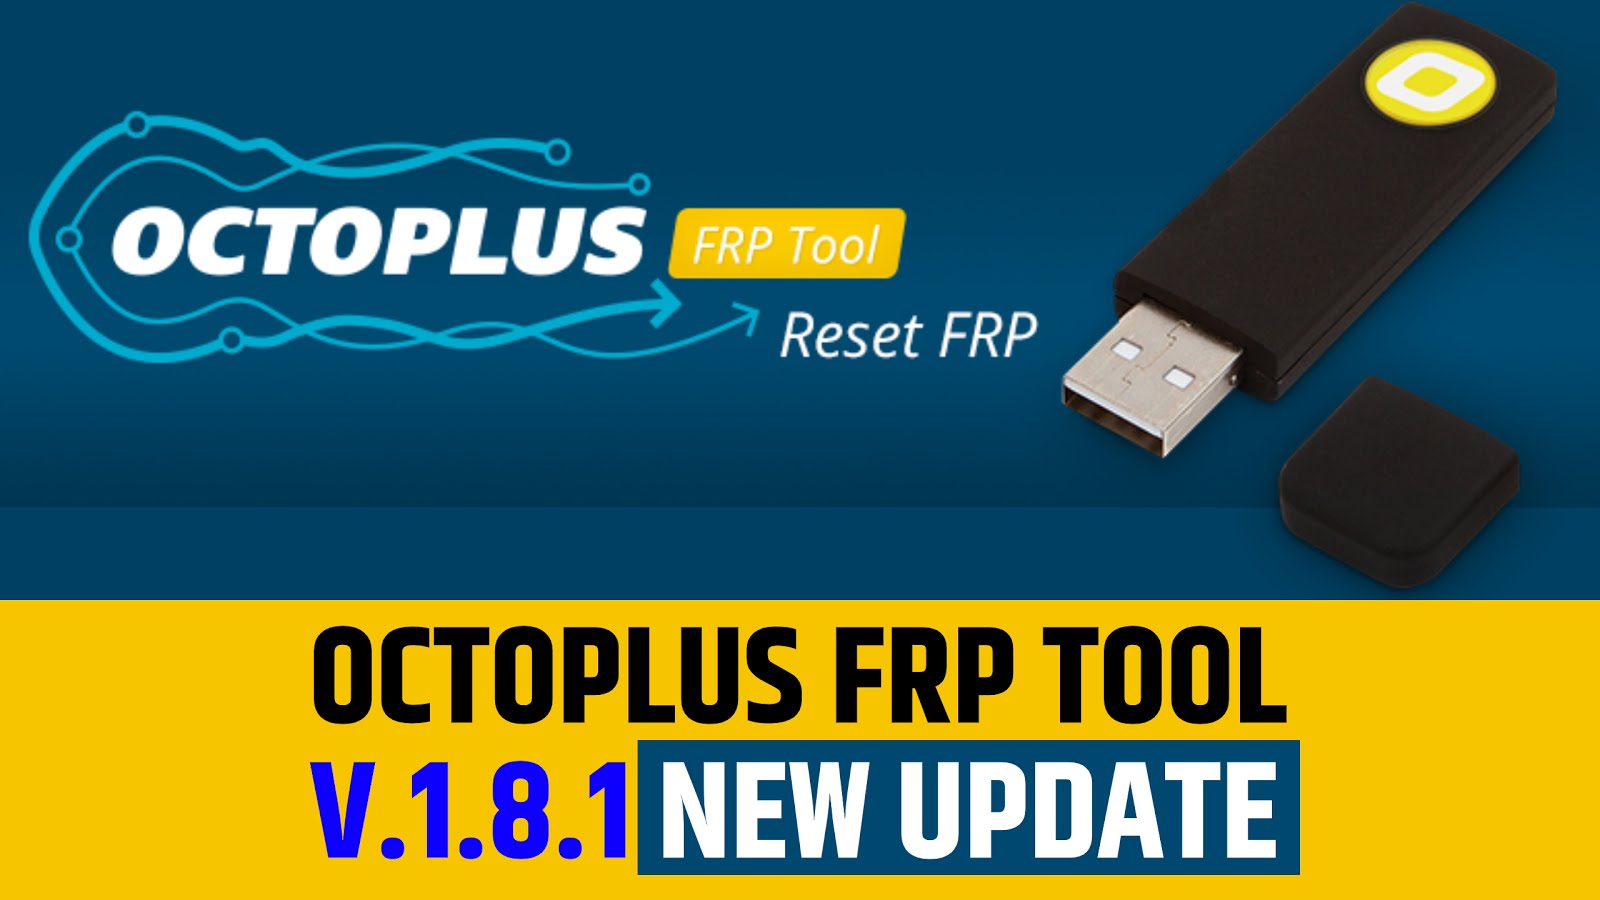 Octoplus frp tool. Octoplus. FRP Tool. FRP Octoplus Samsung п960а. Octopus FRP Tool v 2.1.8.1.